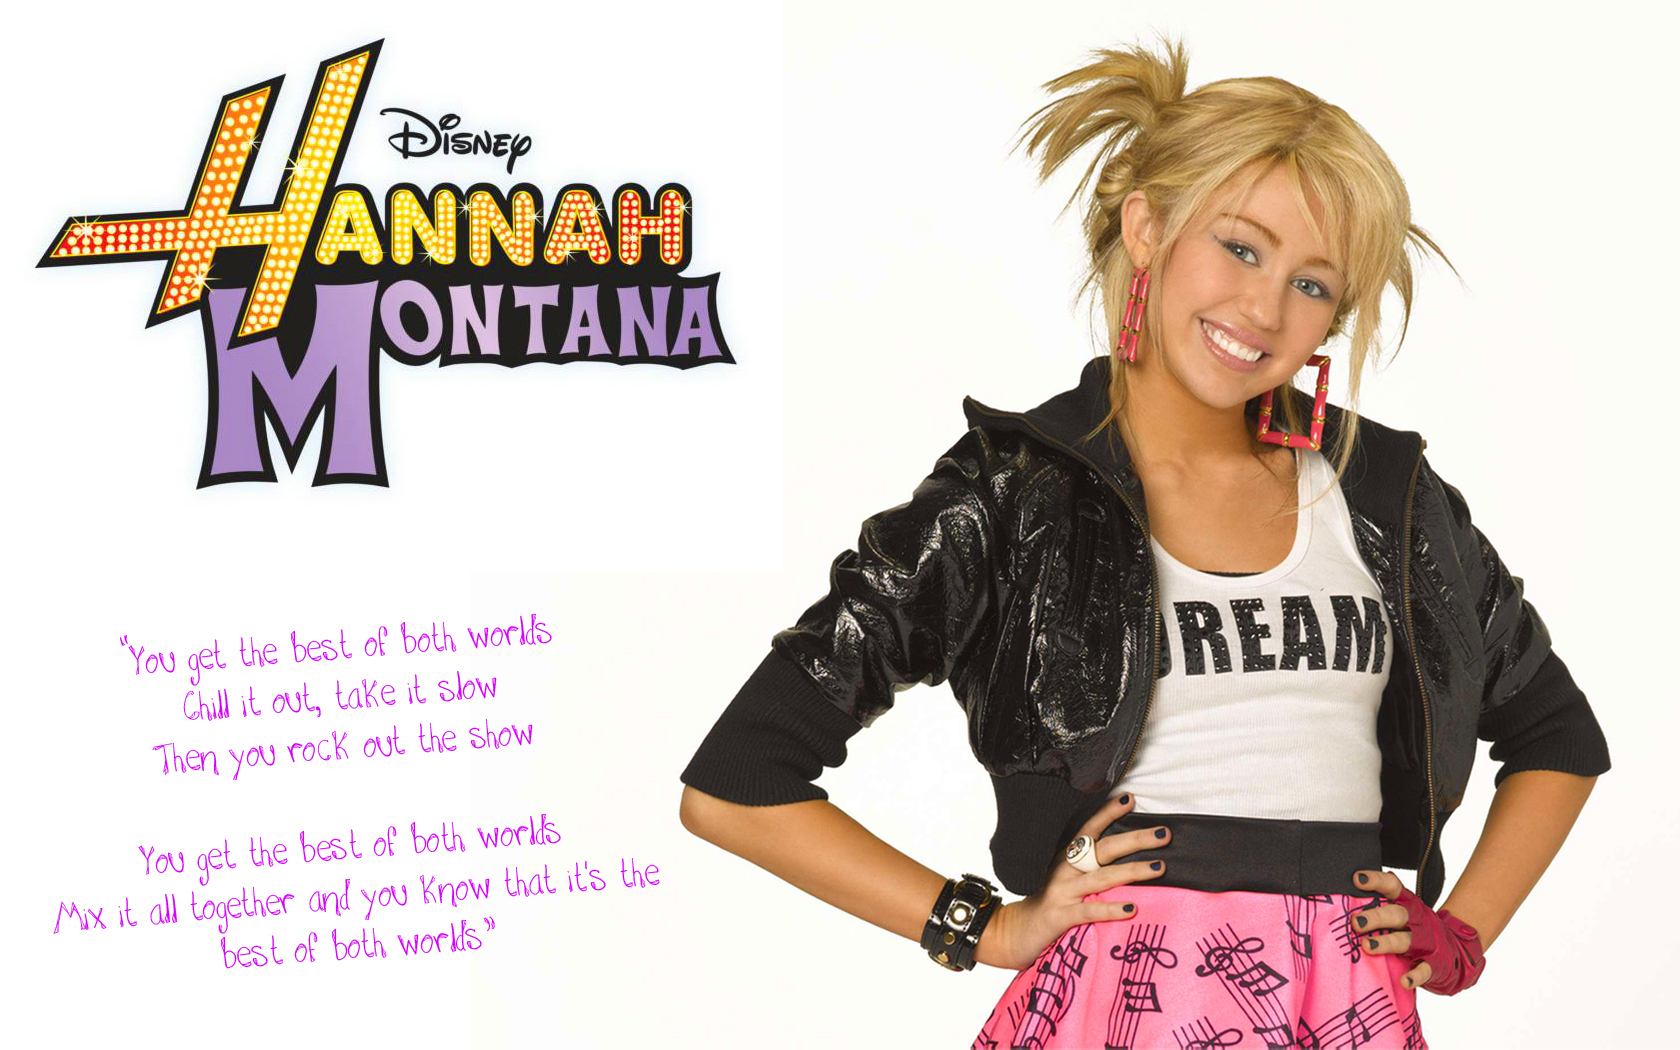 Hannah Montana Wallpaper